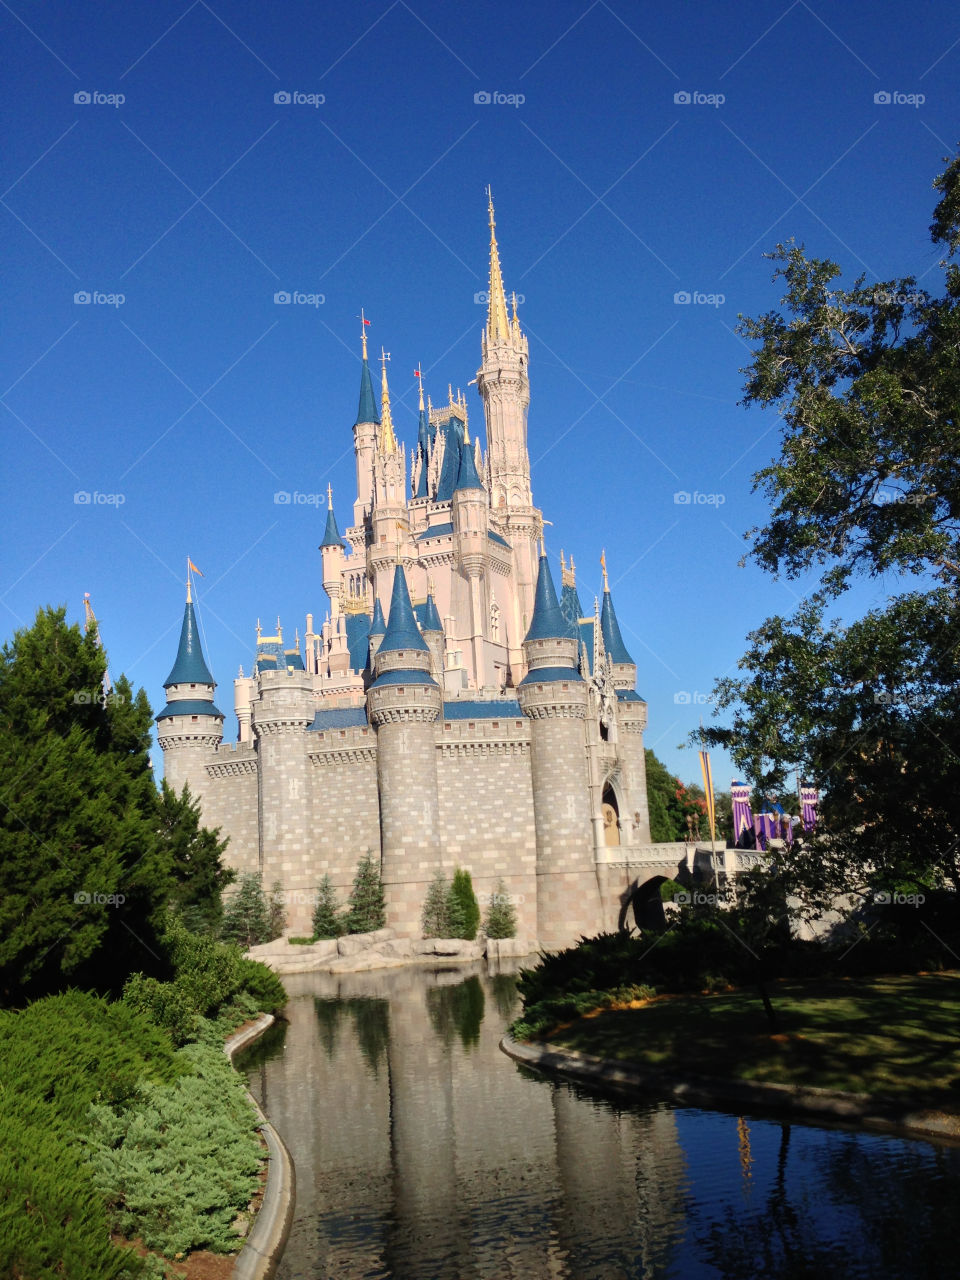 castle orlando disney magic kingdom by disneycjd